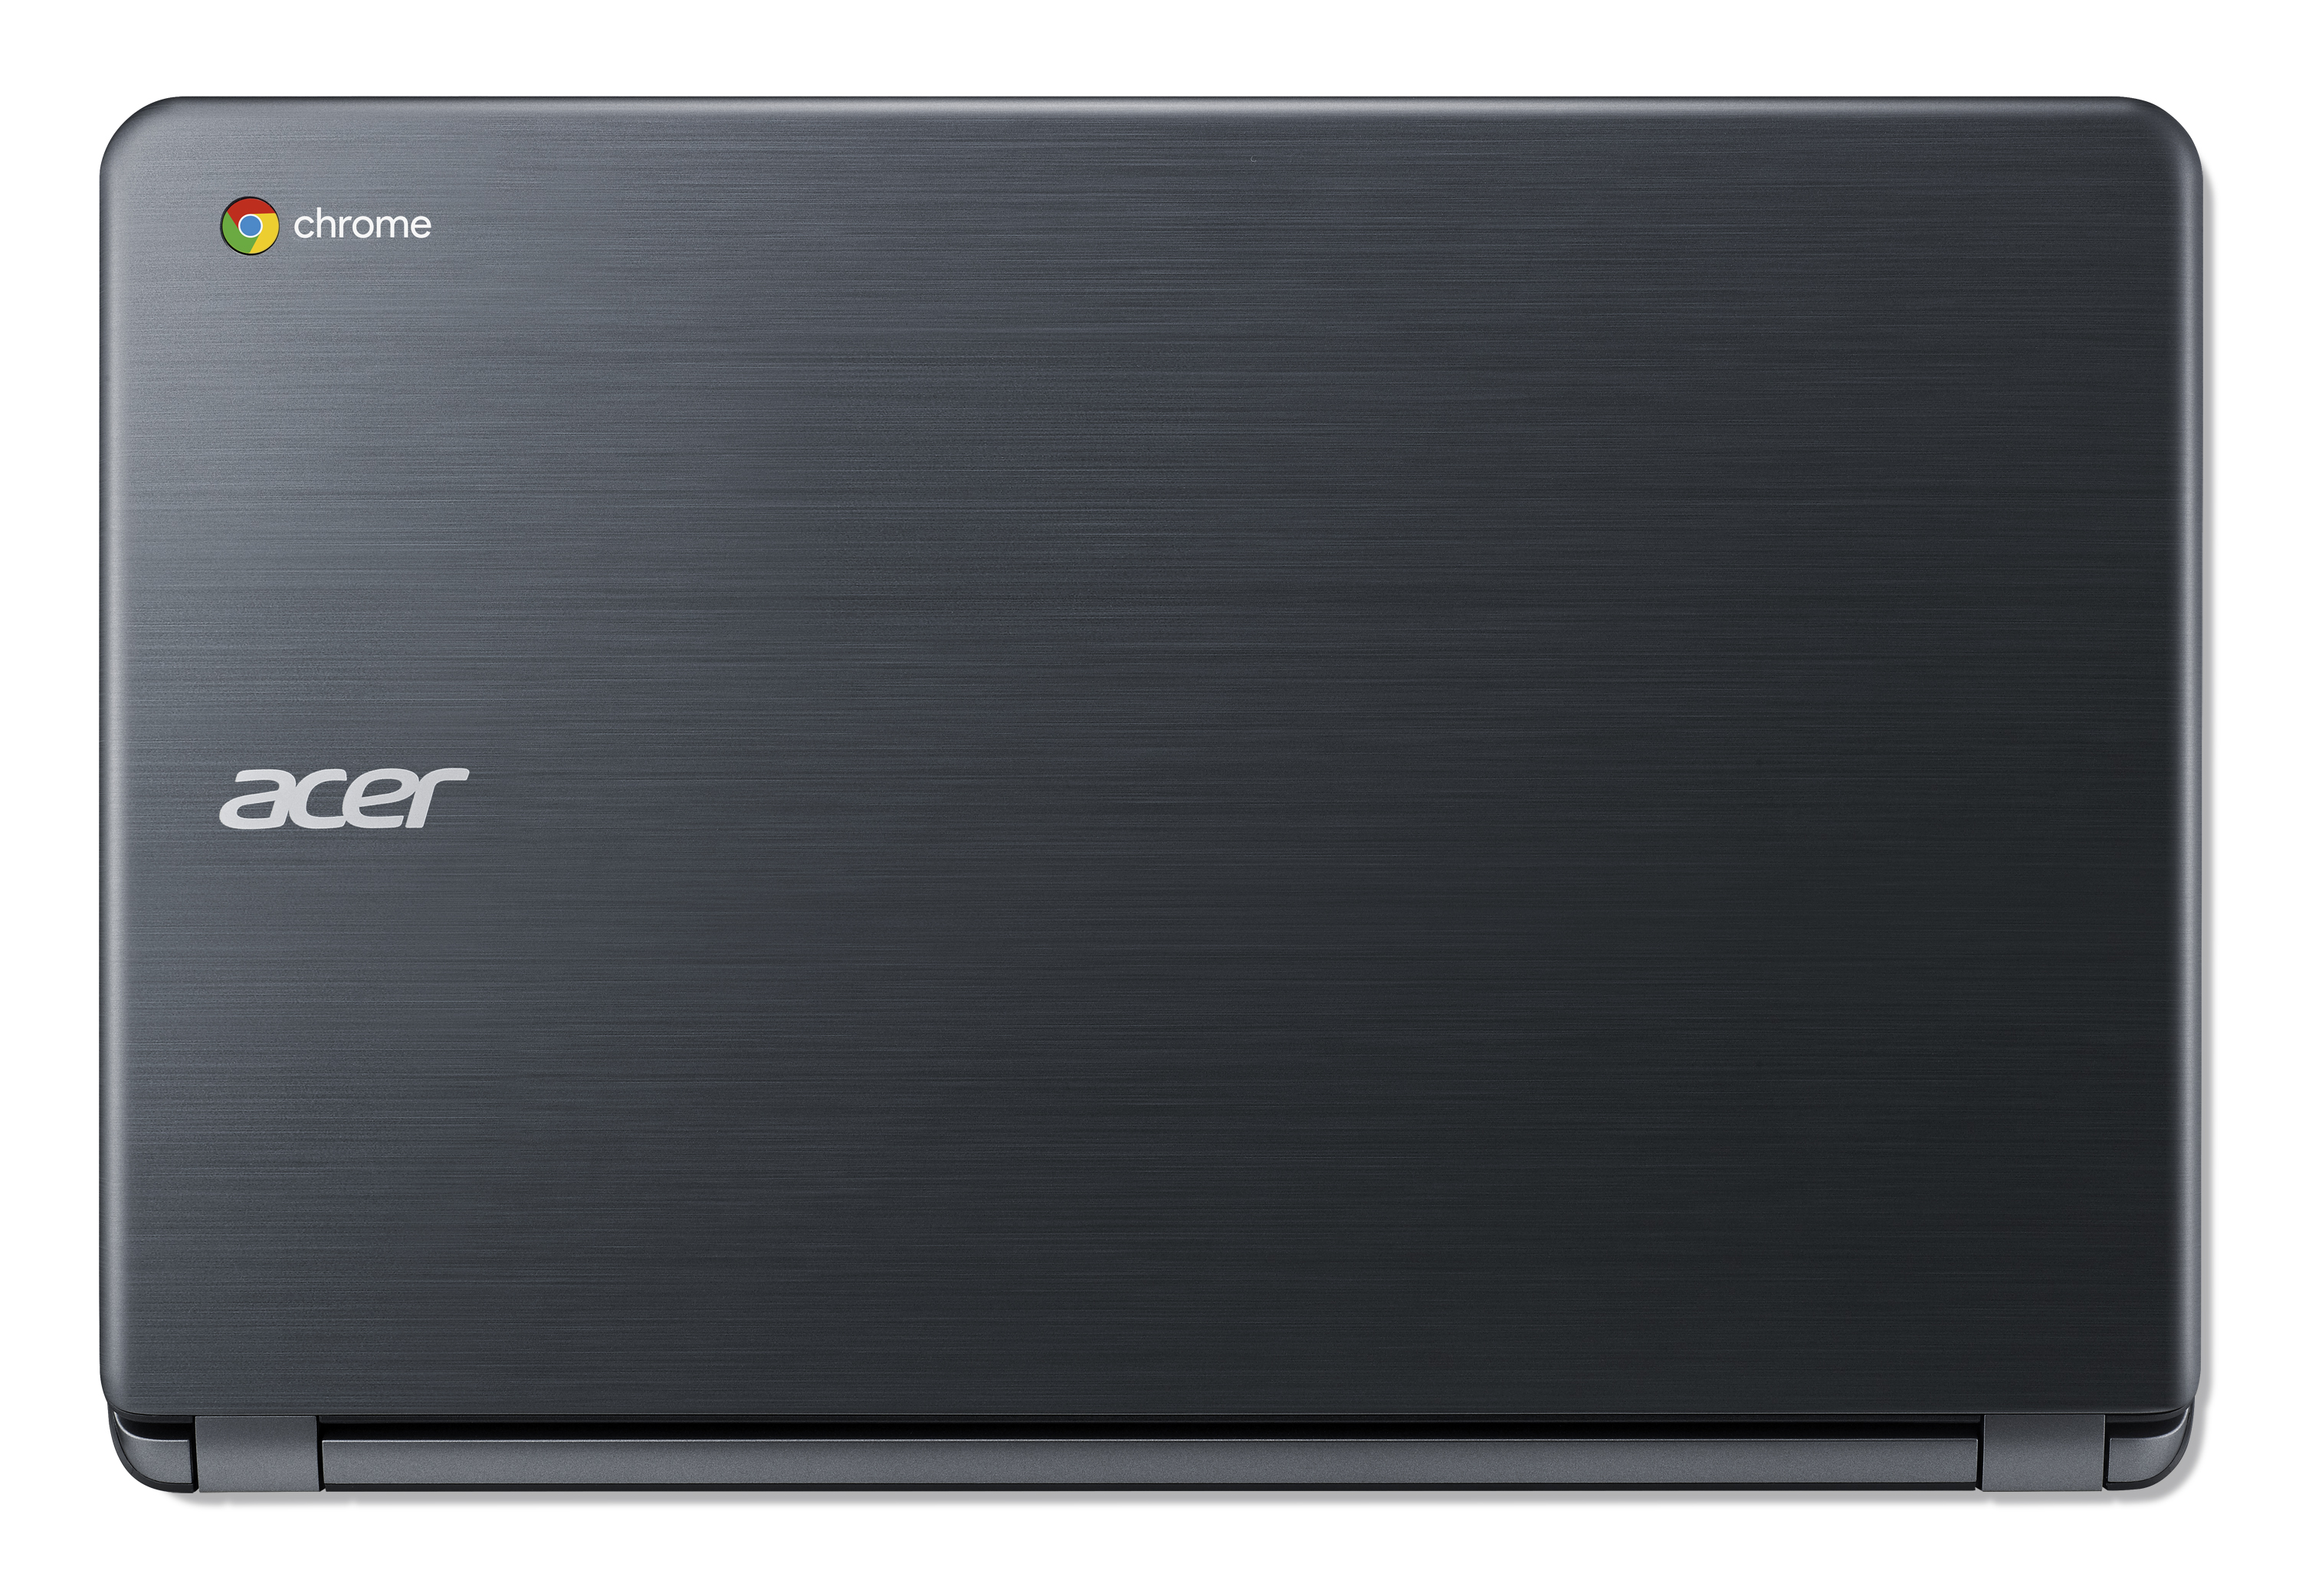 Acer CB3-532-C47C 15.6" Chromebook, Intel Celeron N3060 Dual-Core Processor, 2GB RAM, 16GB Internal Storage, Chrome OS - image 3 of 7